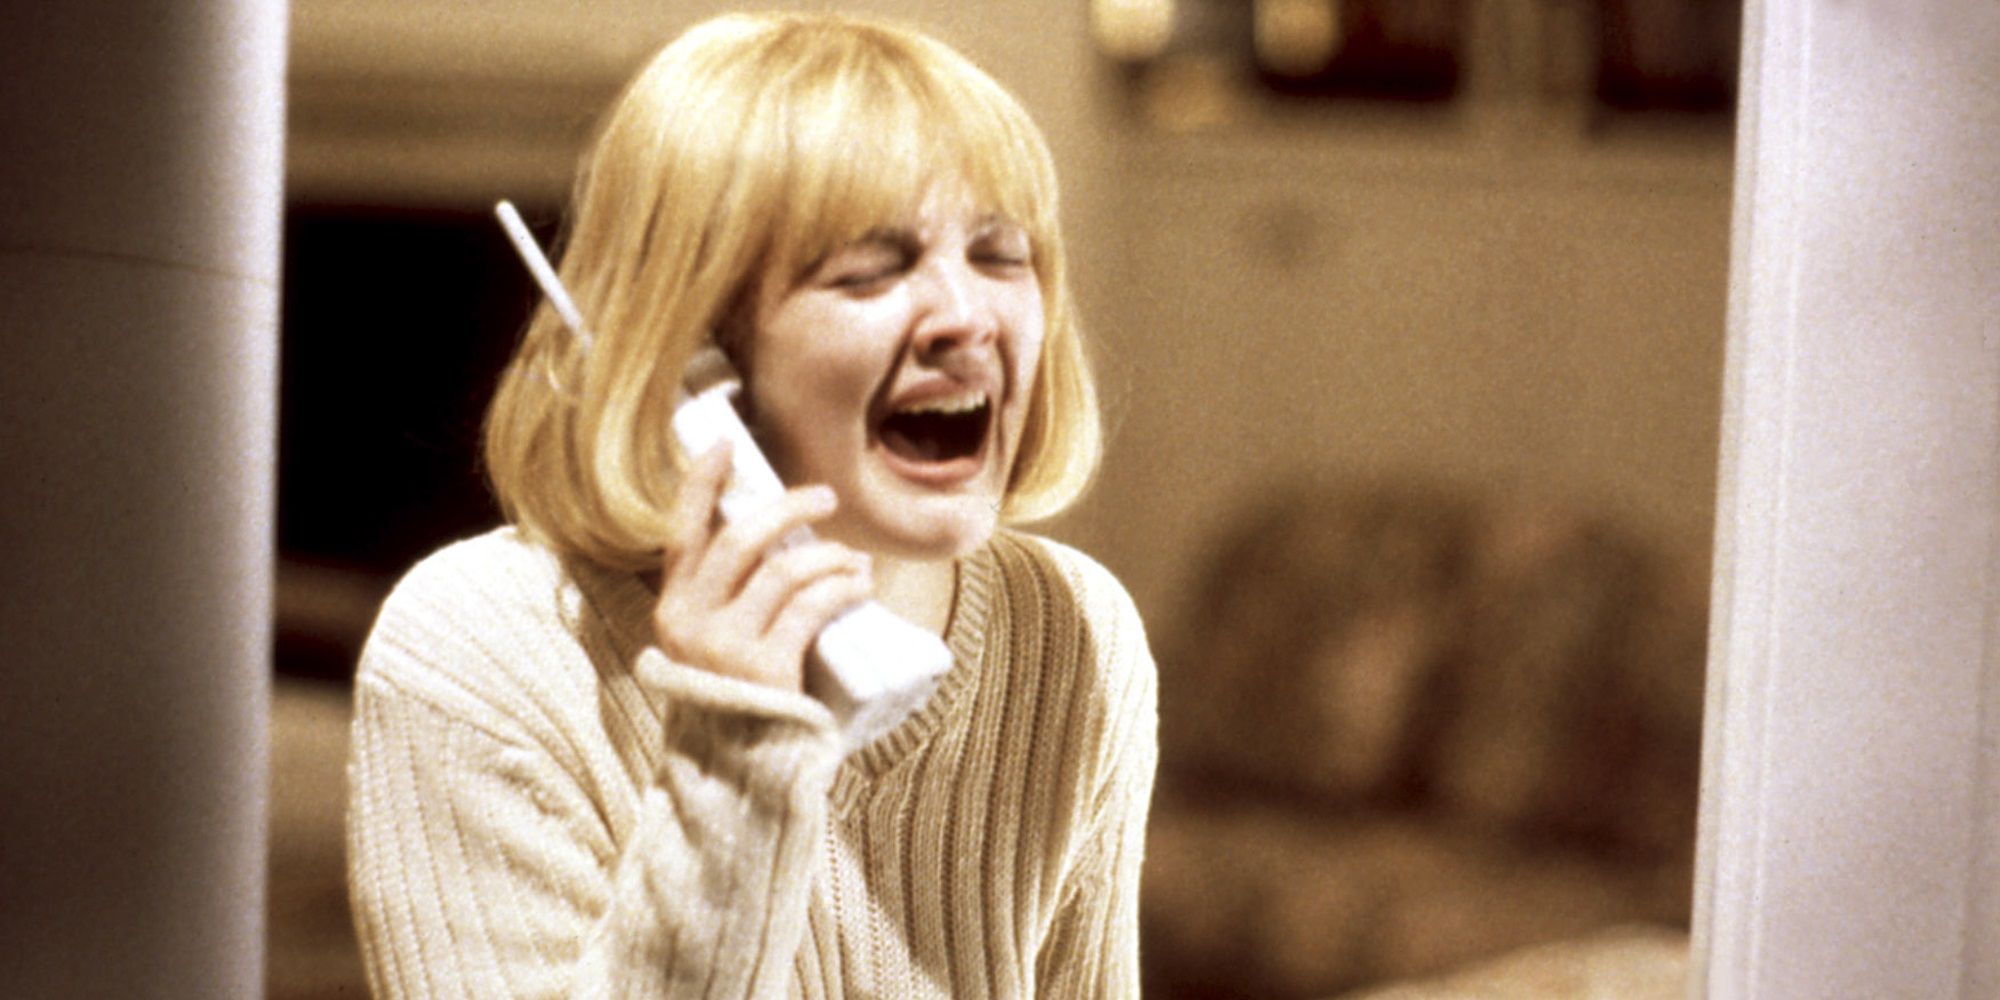 Drew Barrymore on the phone in the original Scream movie